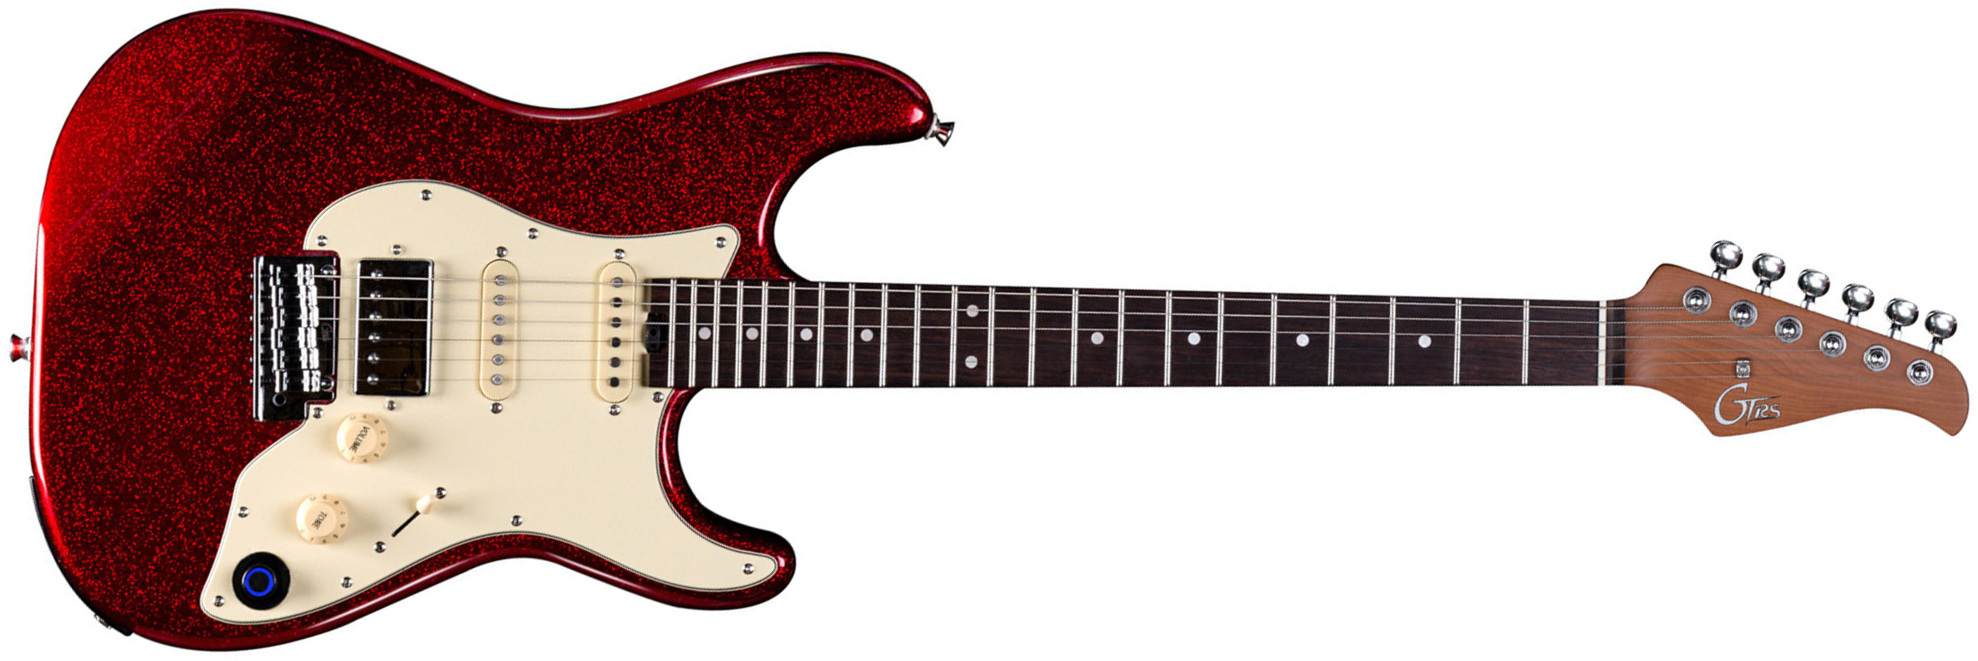 Mooer Gtrs S800 Hss Trem Rw - Metal Red - MIDI / Digital elektrische gitaar - Main picture